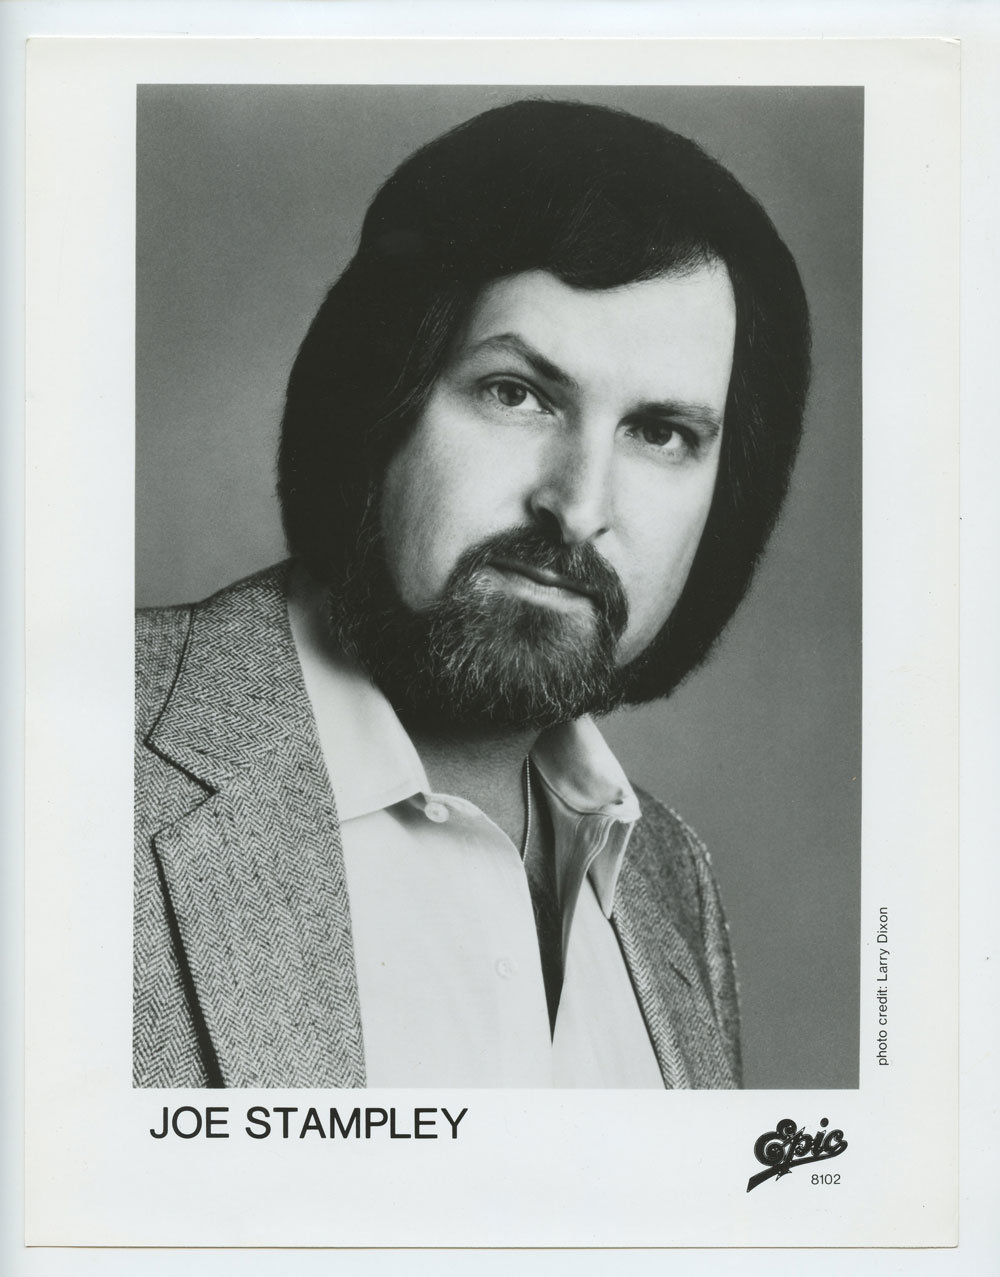 Joe Stampley Photo 1980s Epic Records